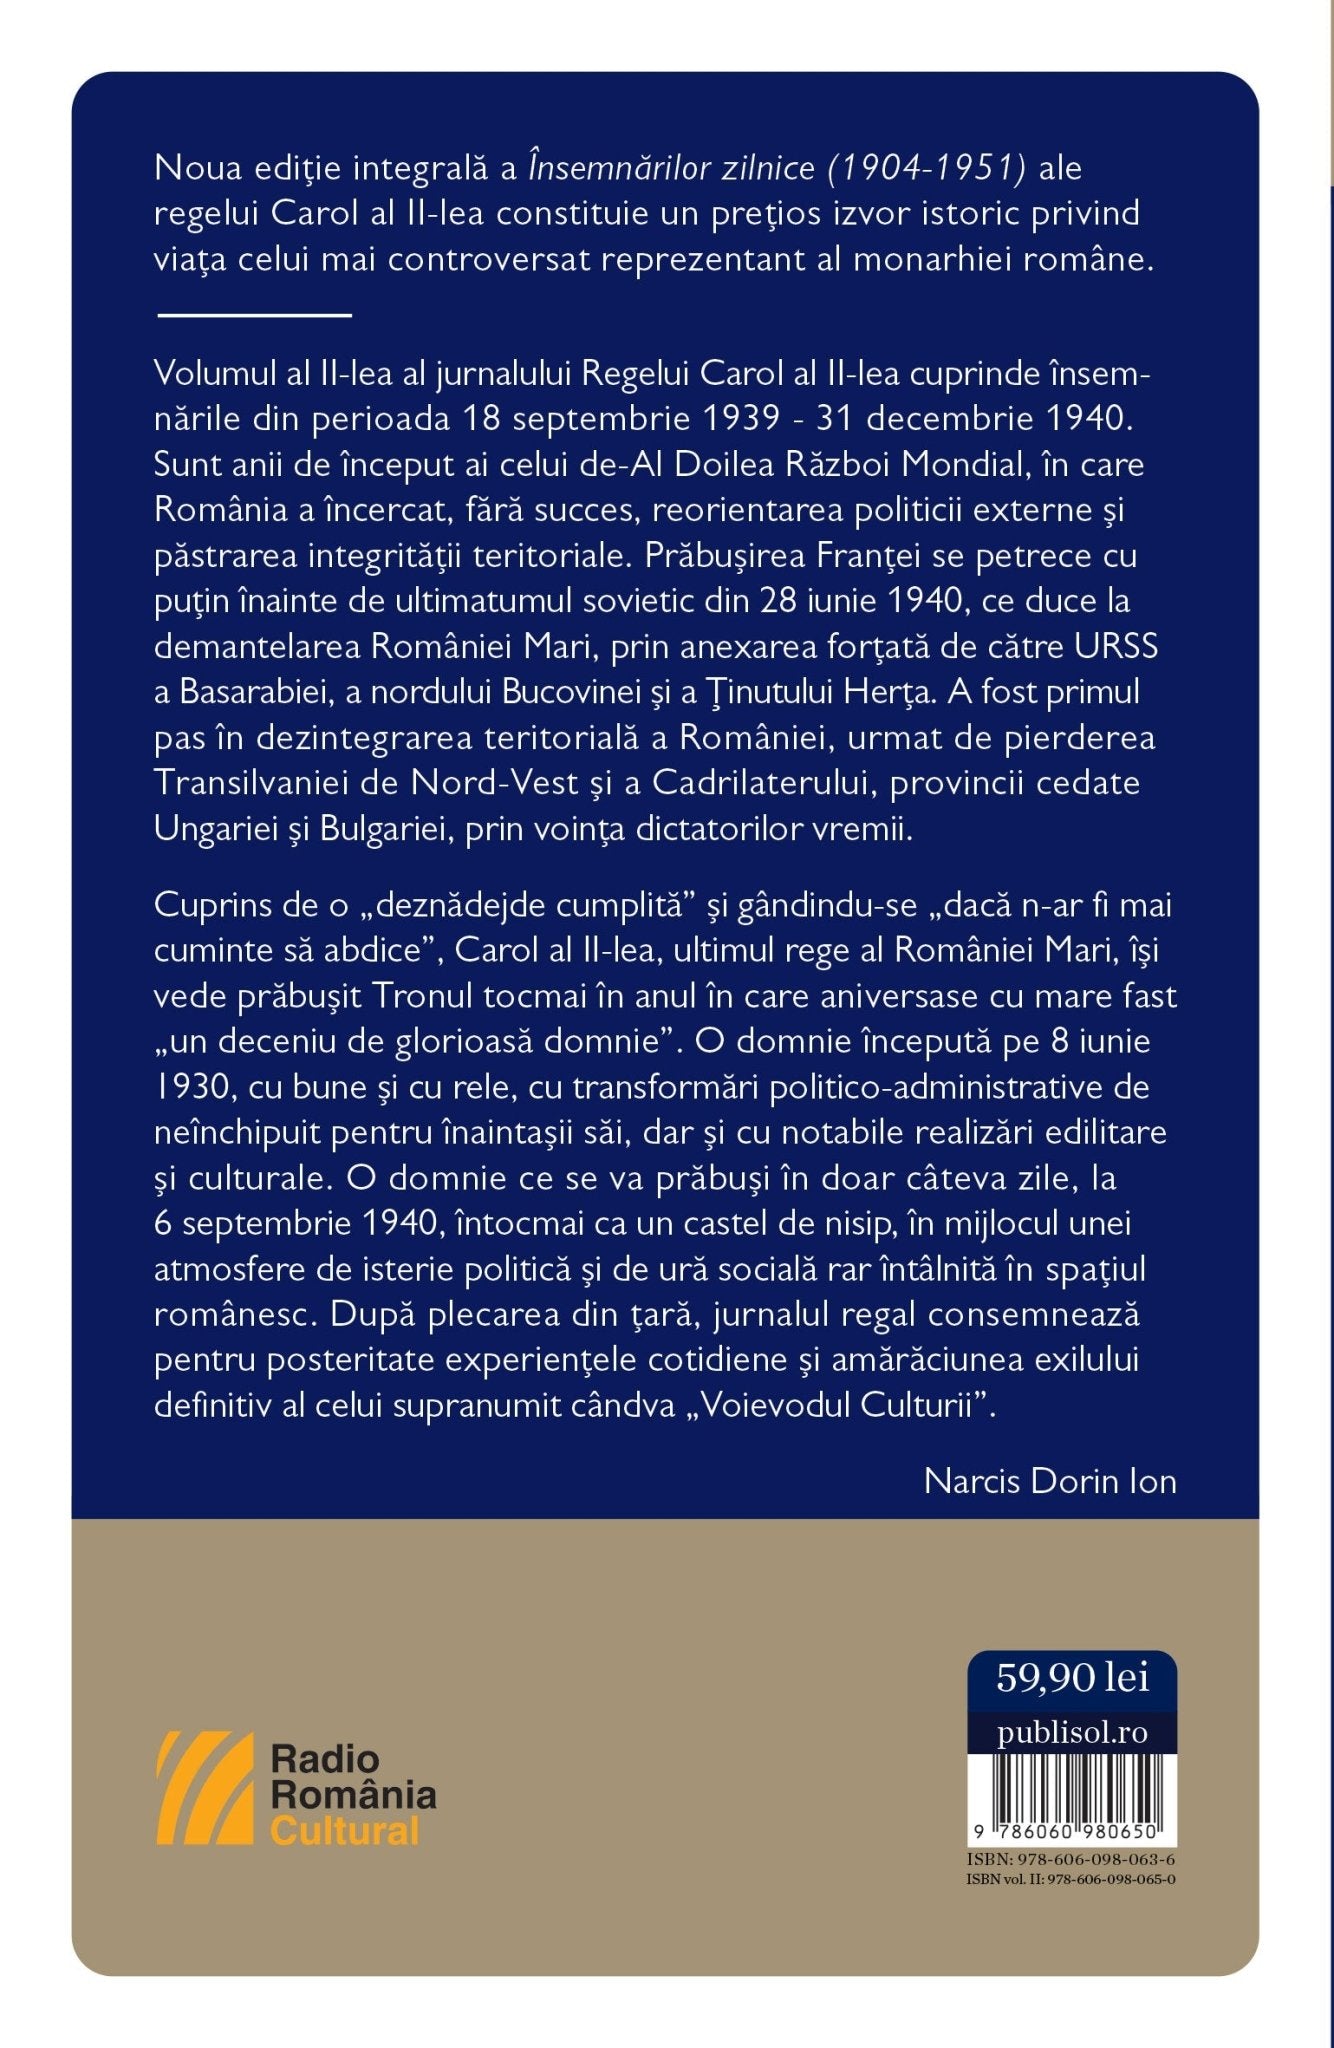 Carol al II-lea: Intre pasiune si datorie. Insemnari zilnice Vol. 2 1394-1940 - Publisol.ro